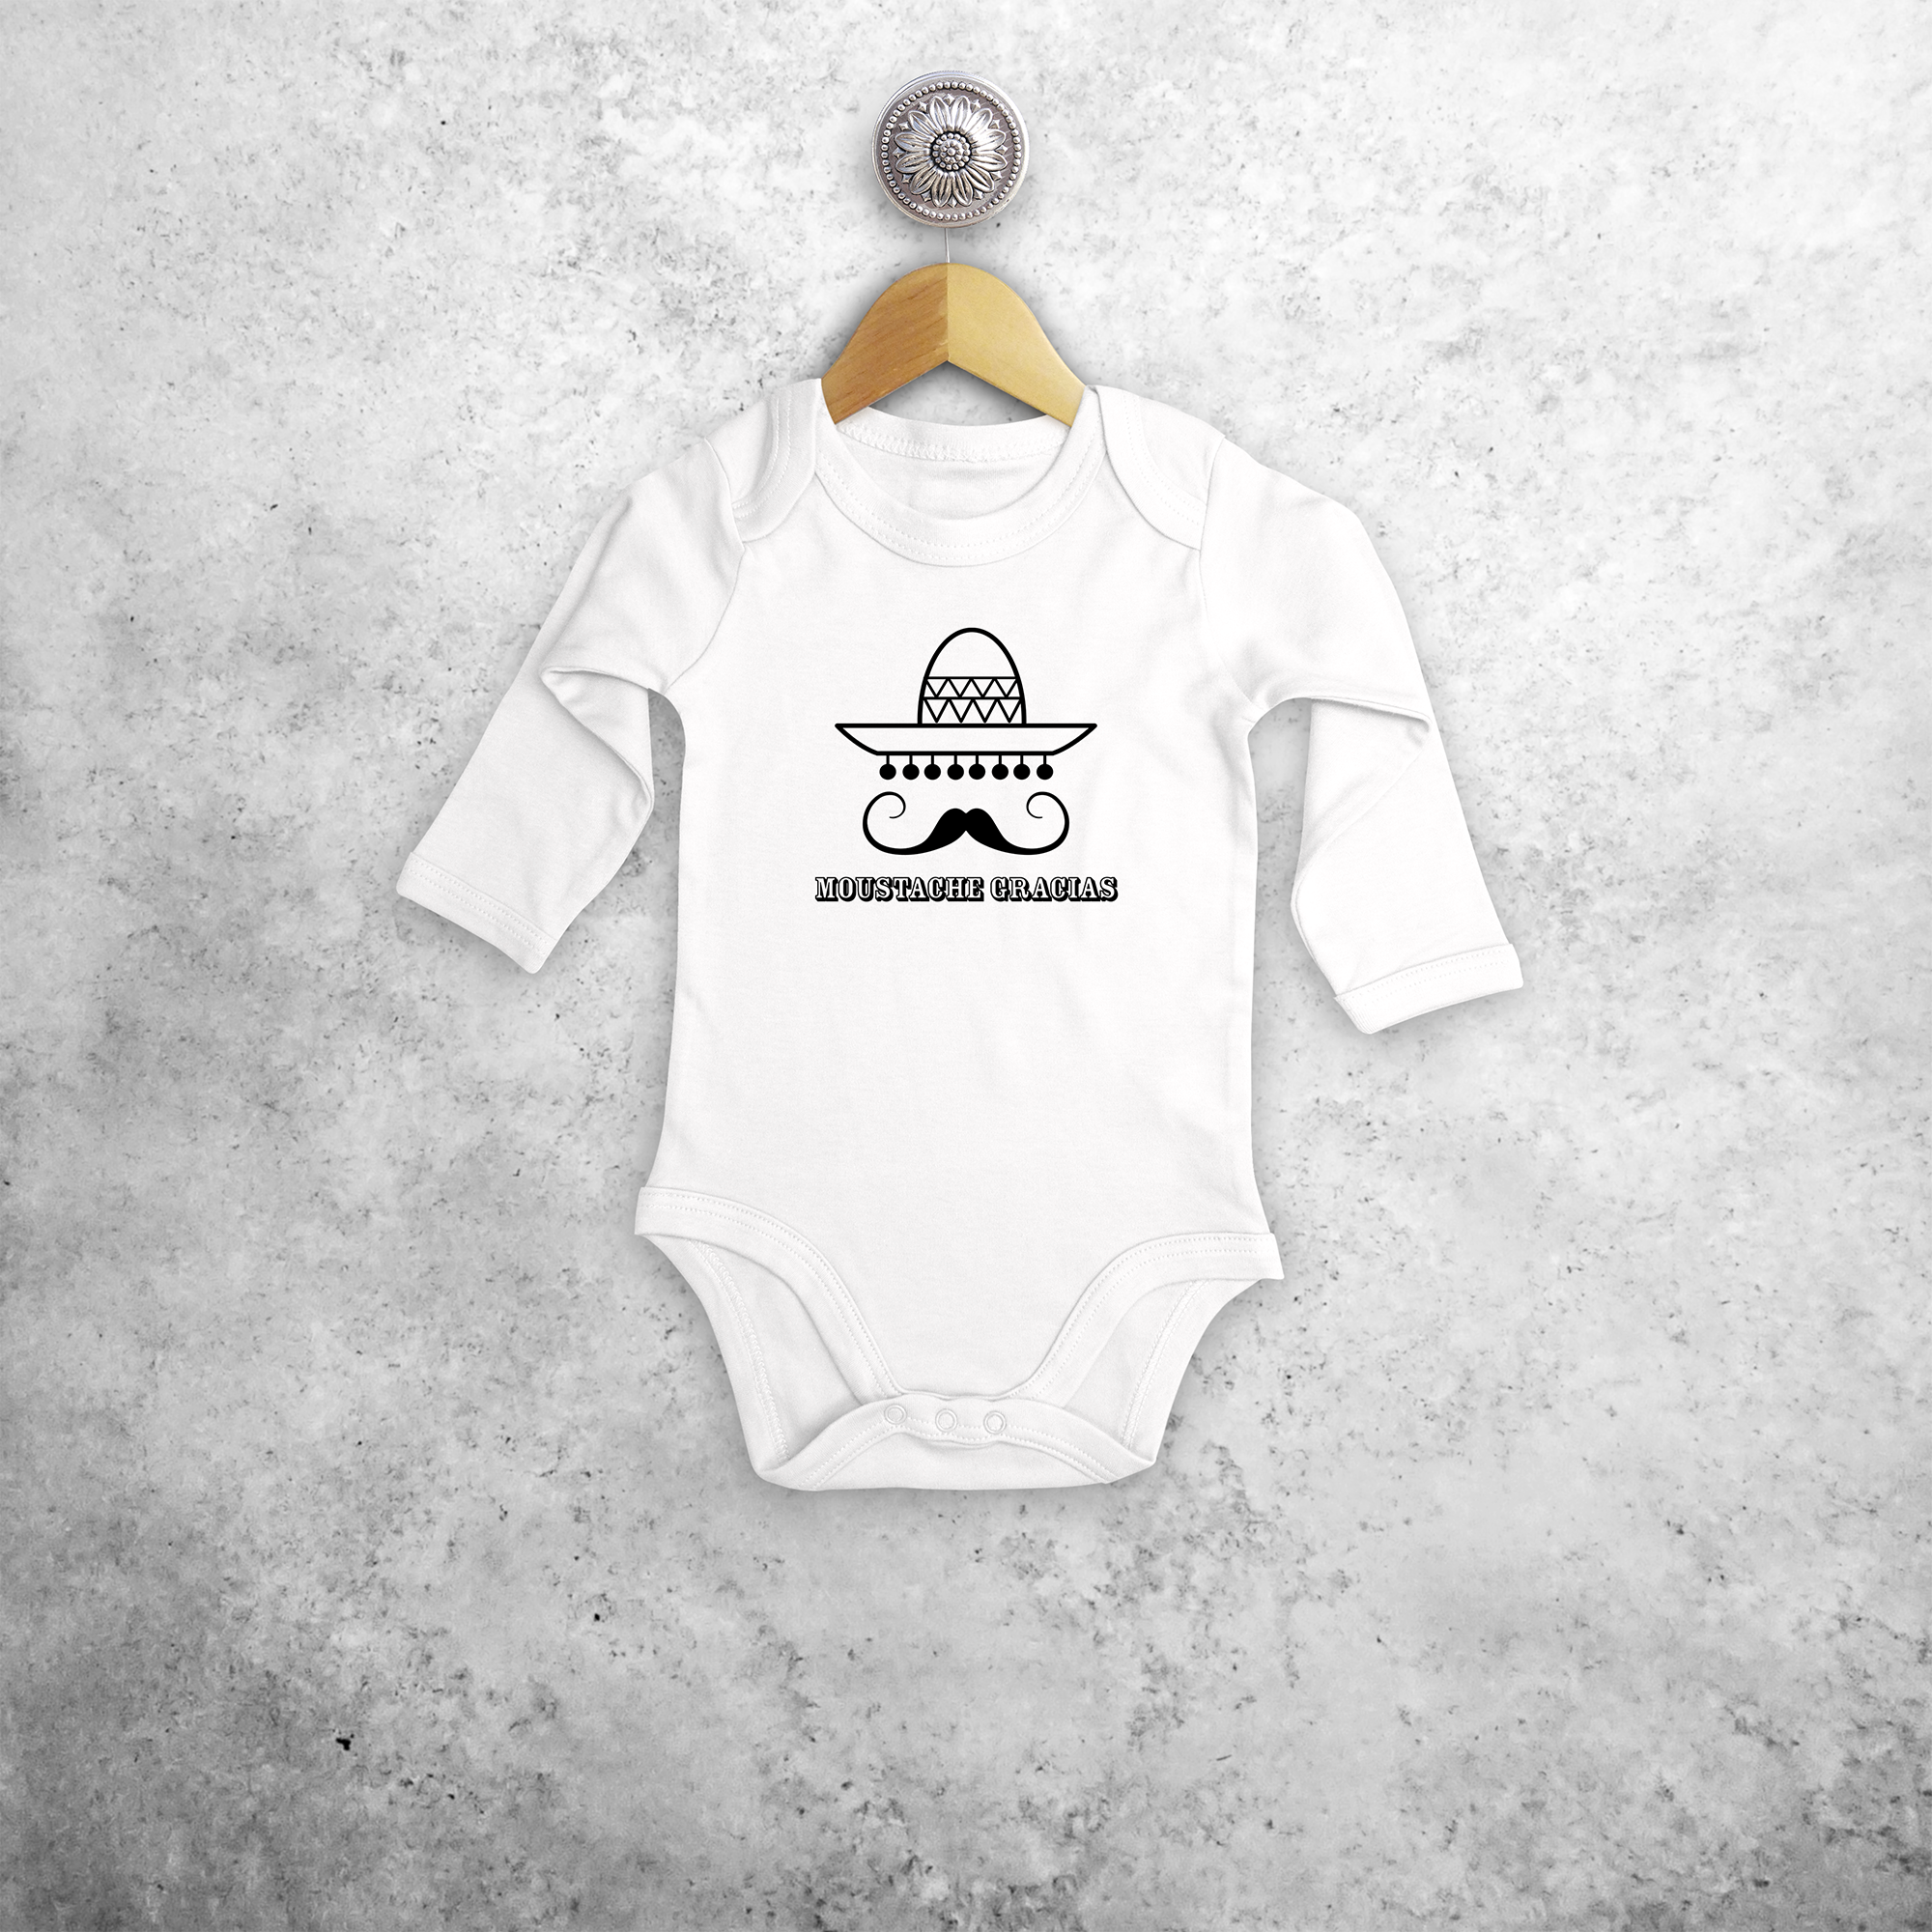 'Moustache gracias' baby kruippakje met lange mouwen